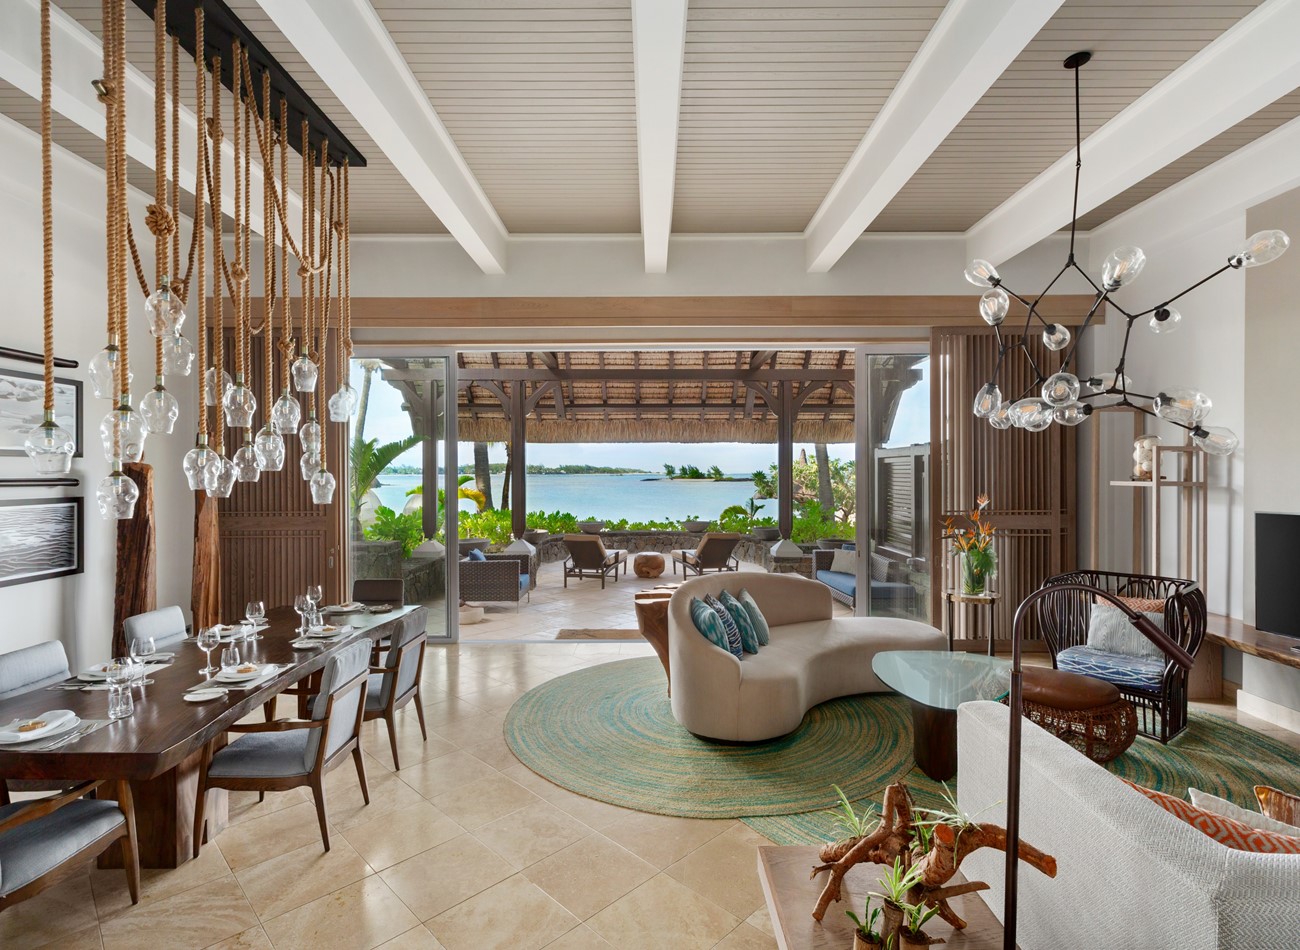 Luxury Mauritius hotel - Le Touessrok, a great Mauritian 